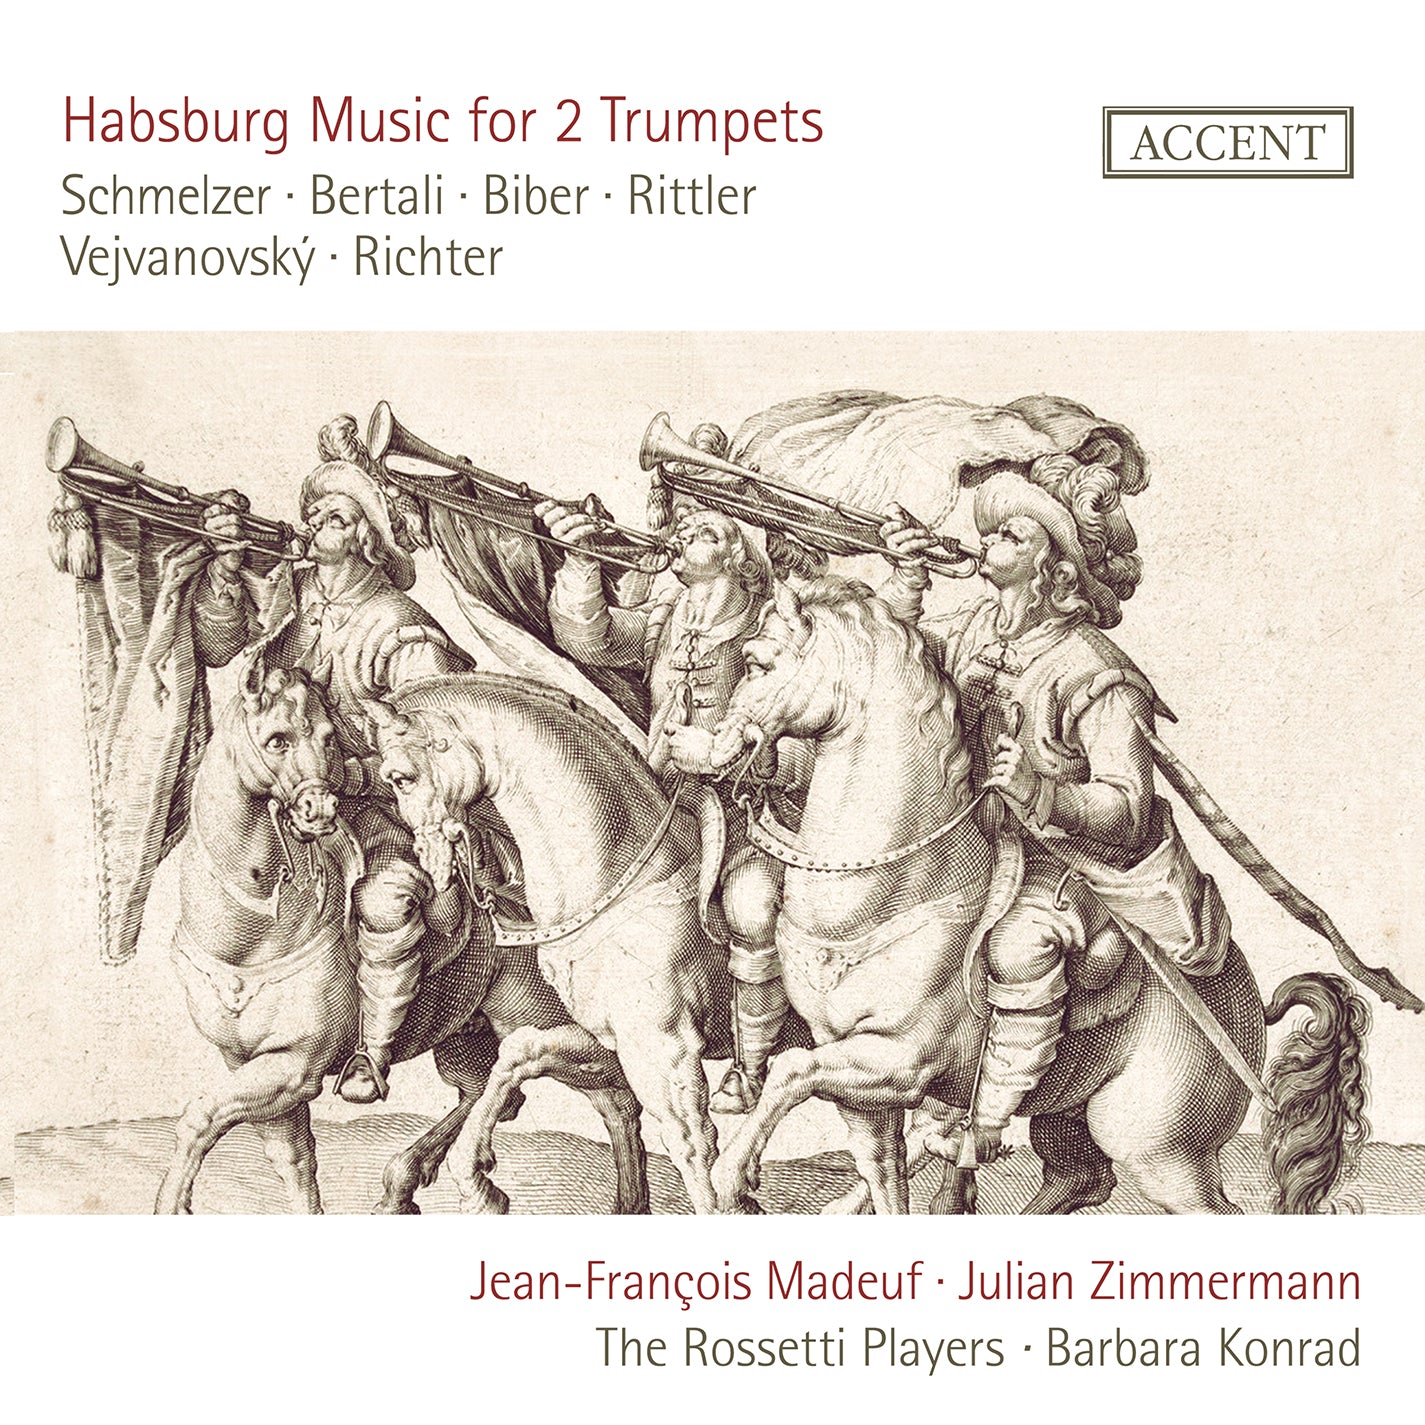 Habsburg Music for Two Trumpets / Madeuf, Zimmermann, Konrad, Rossetti Players